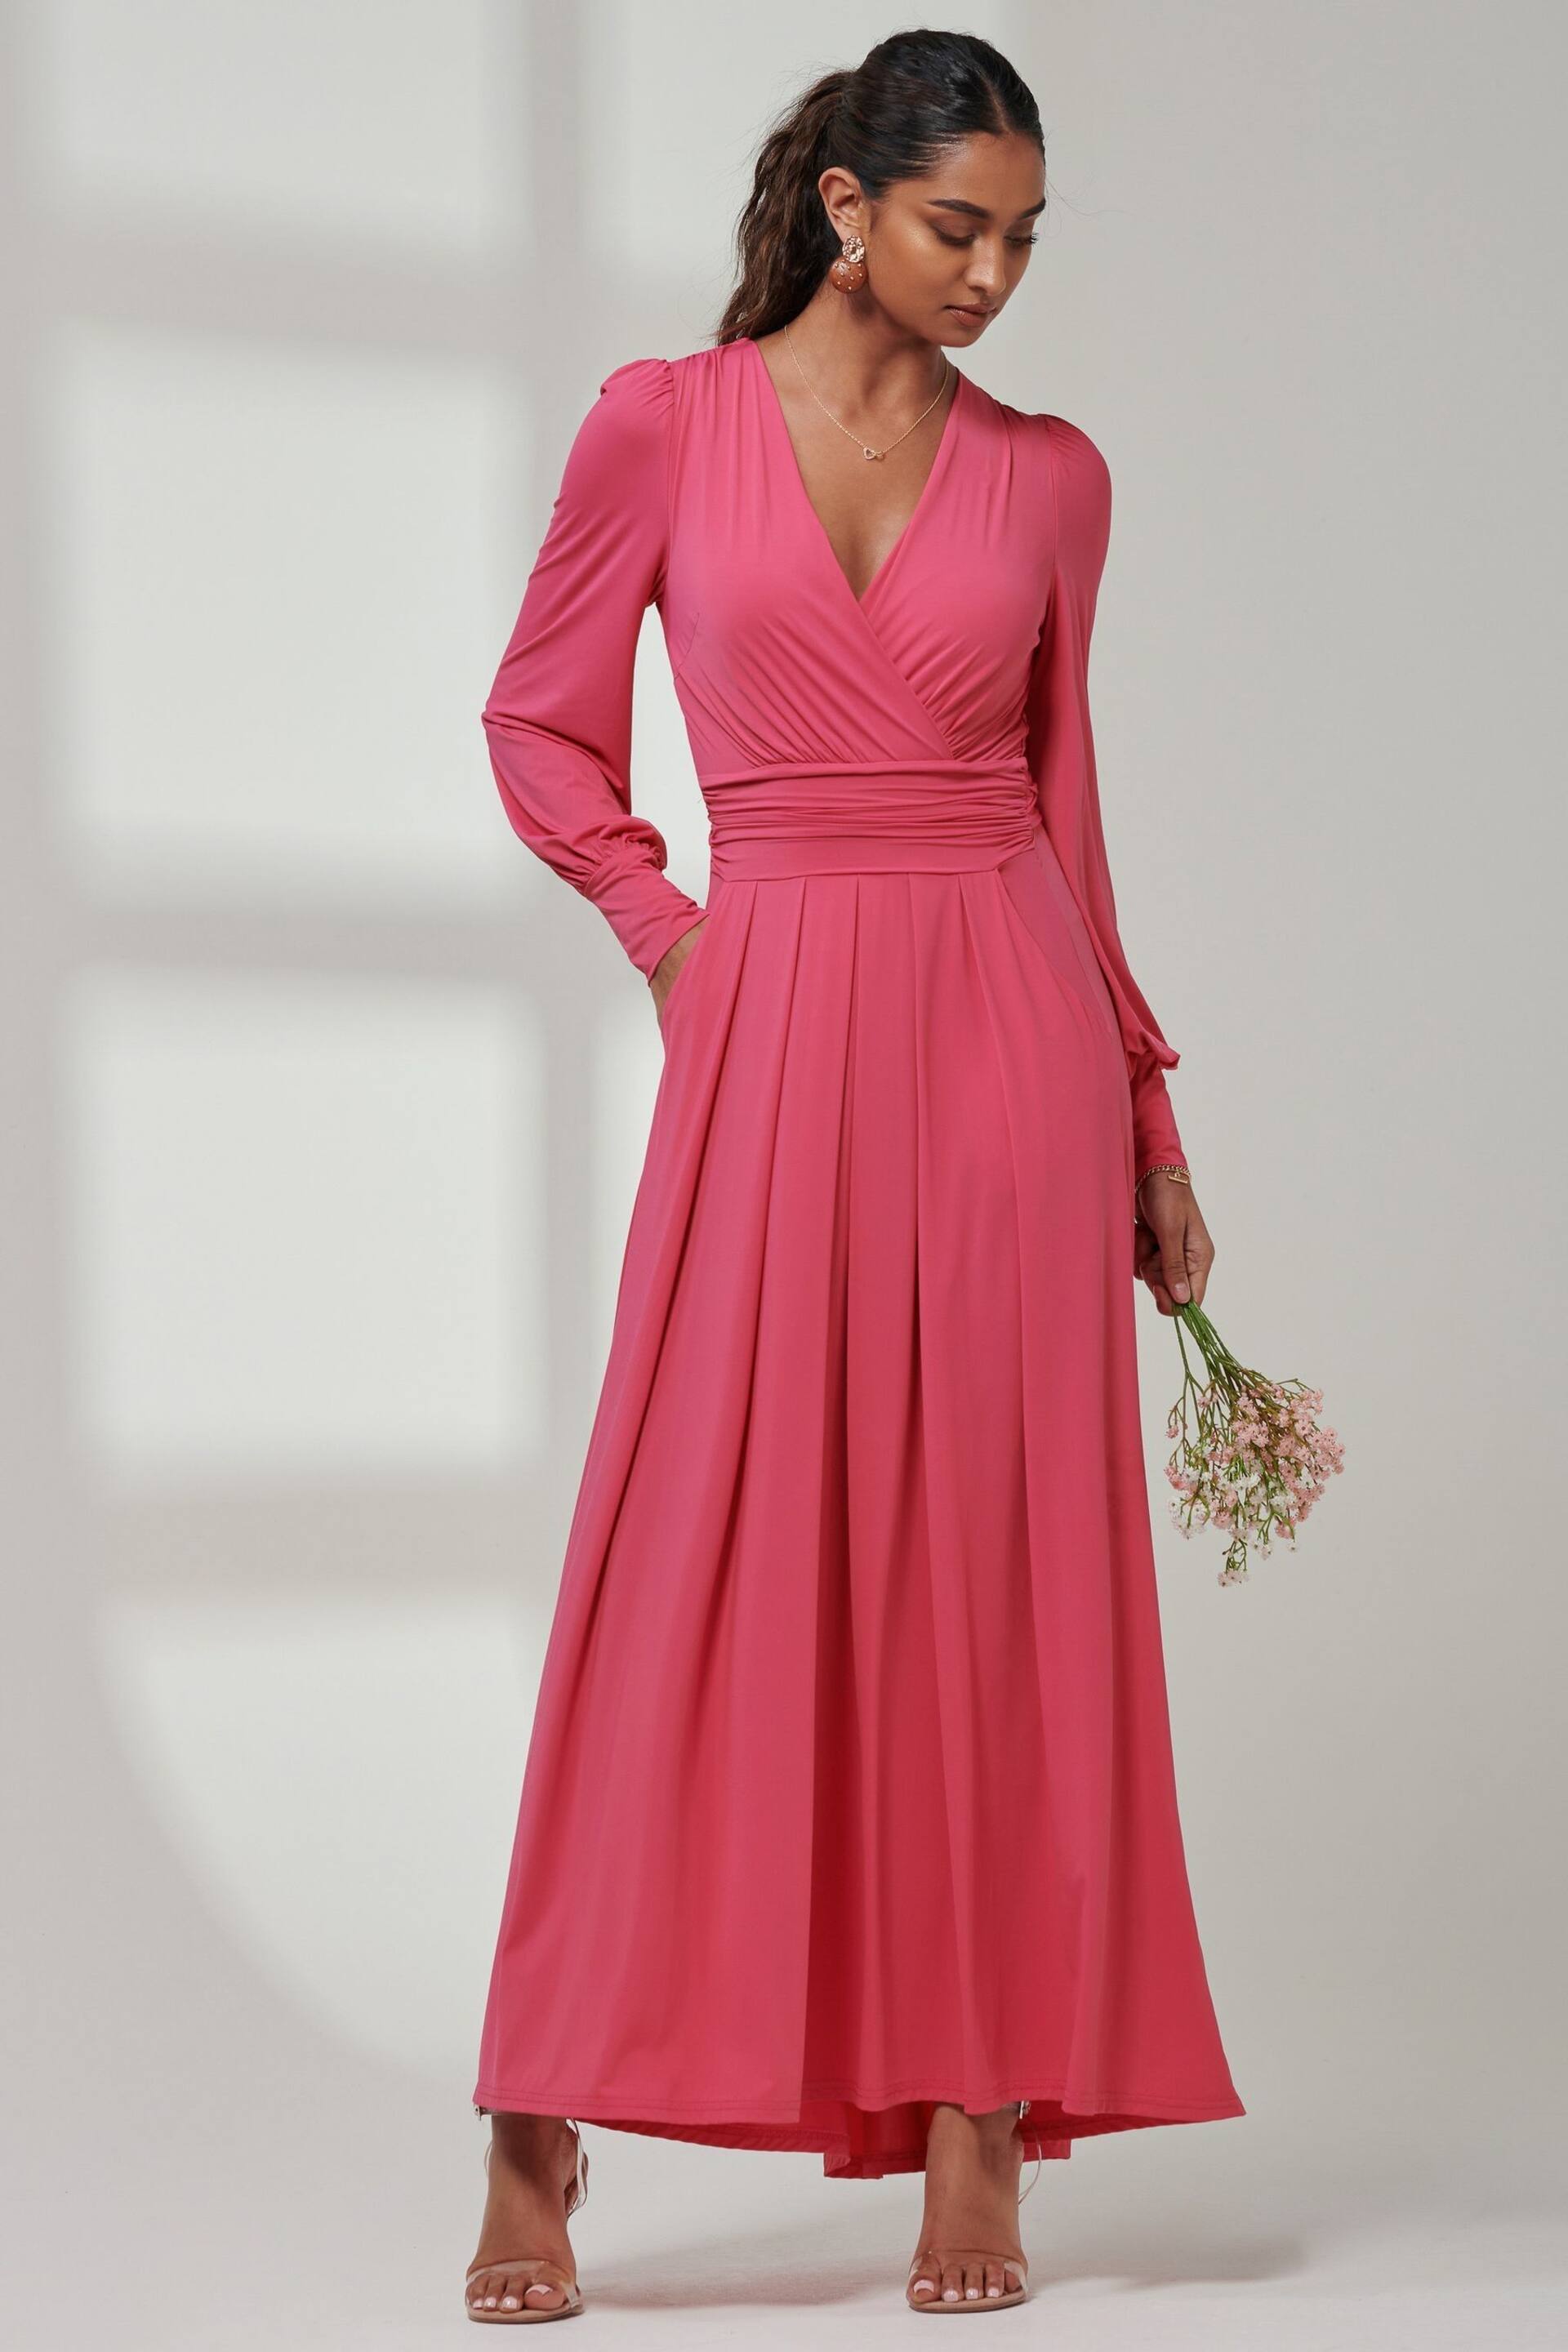 Jolie Moi Pink Giulia Long Sleeve Maxi Dress - Image 1 of 6